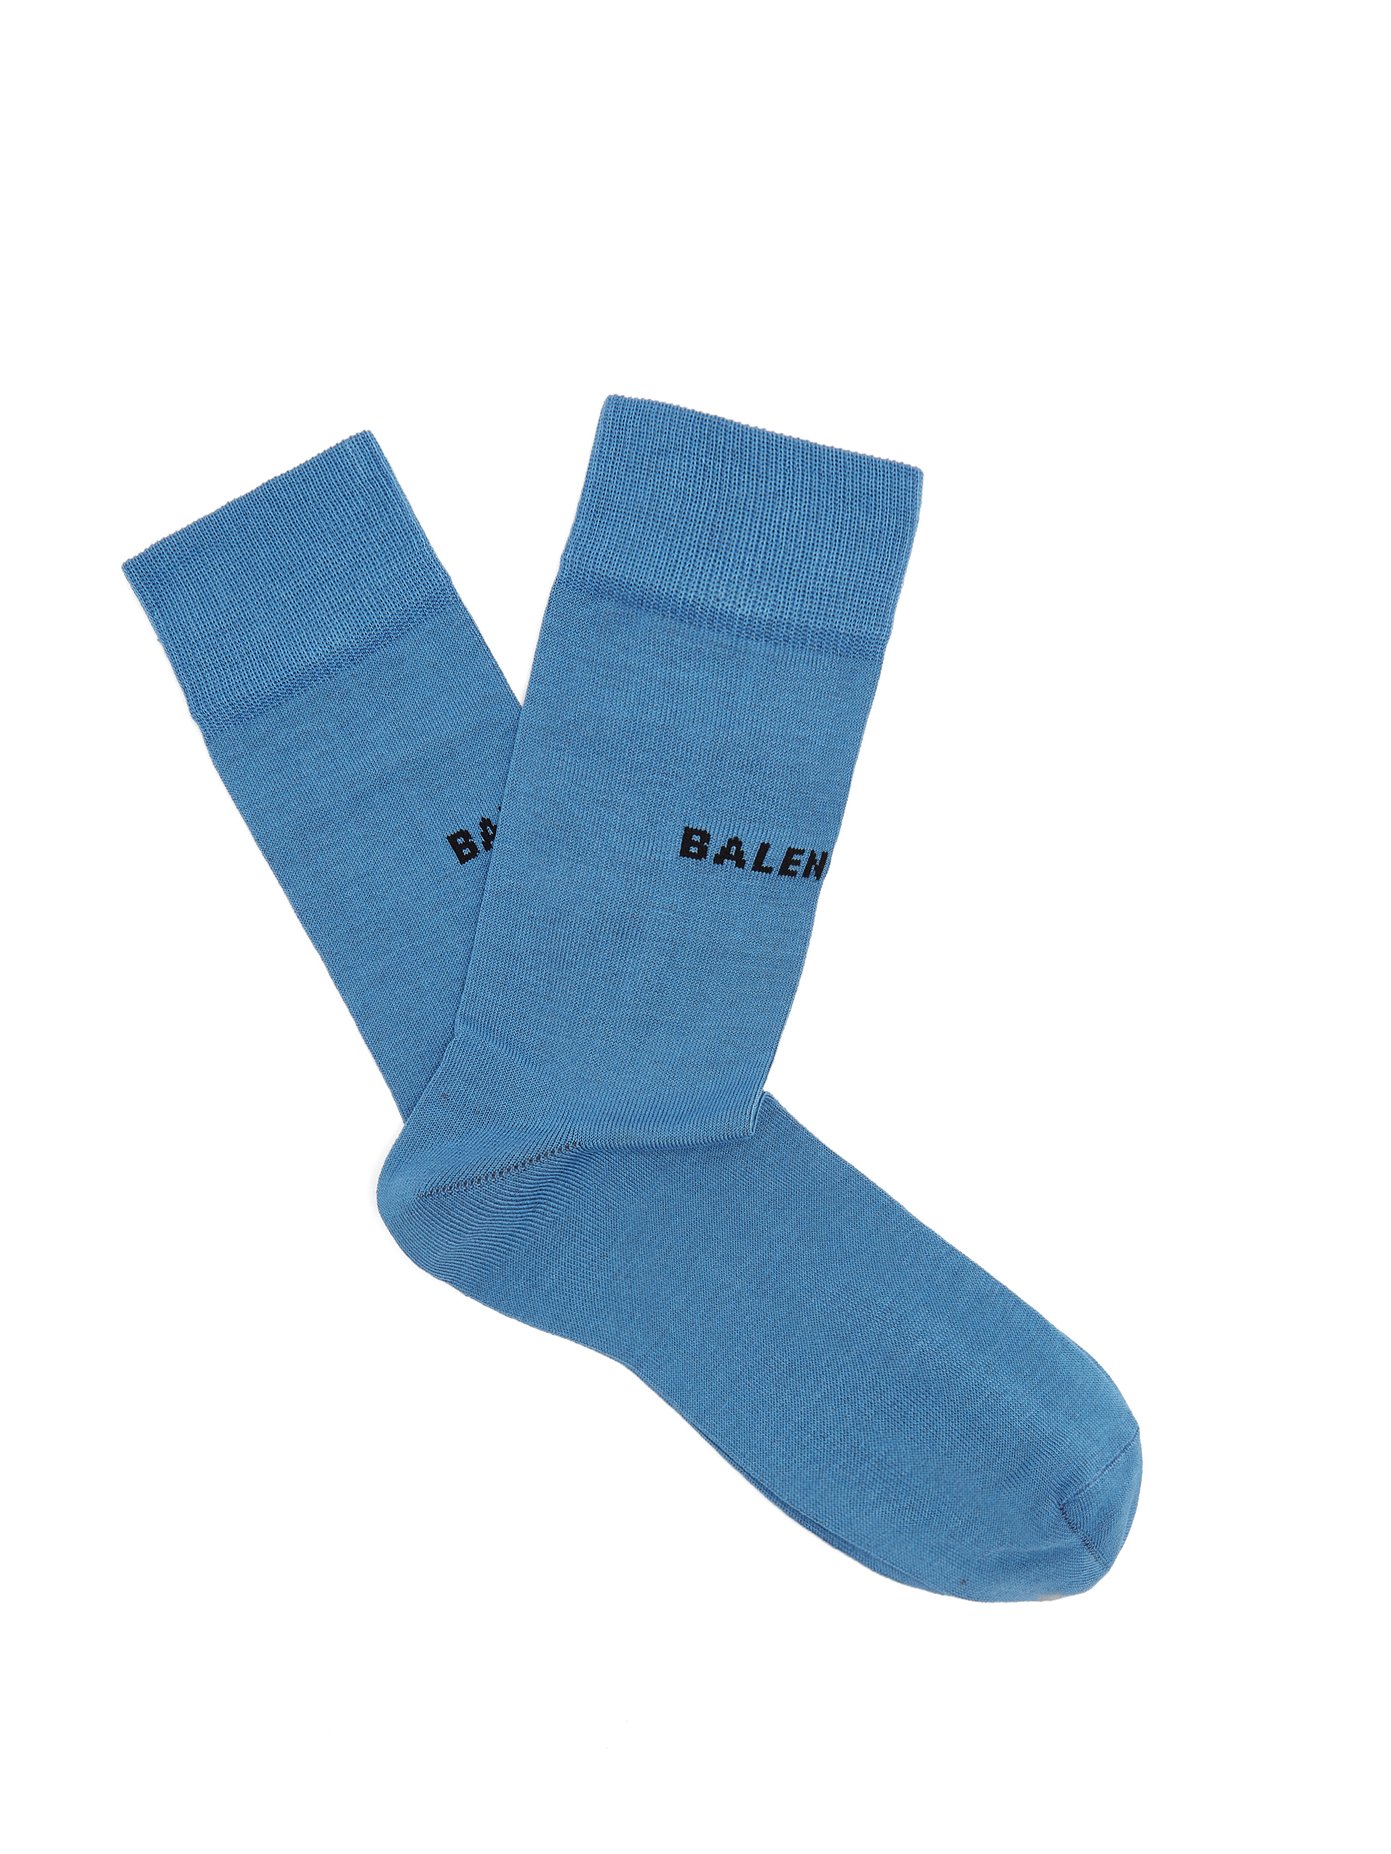 balenciaga blue socks